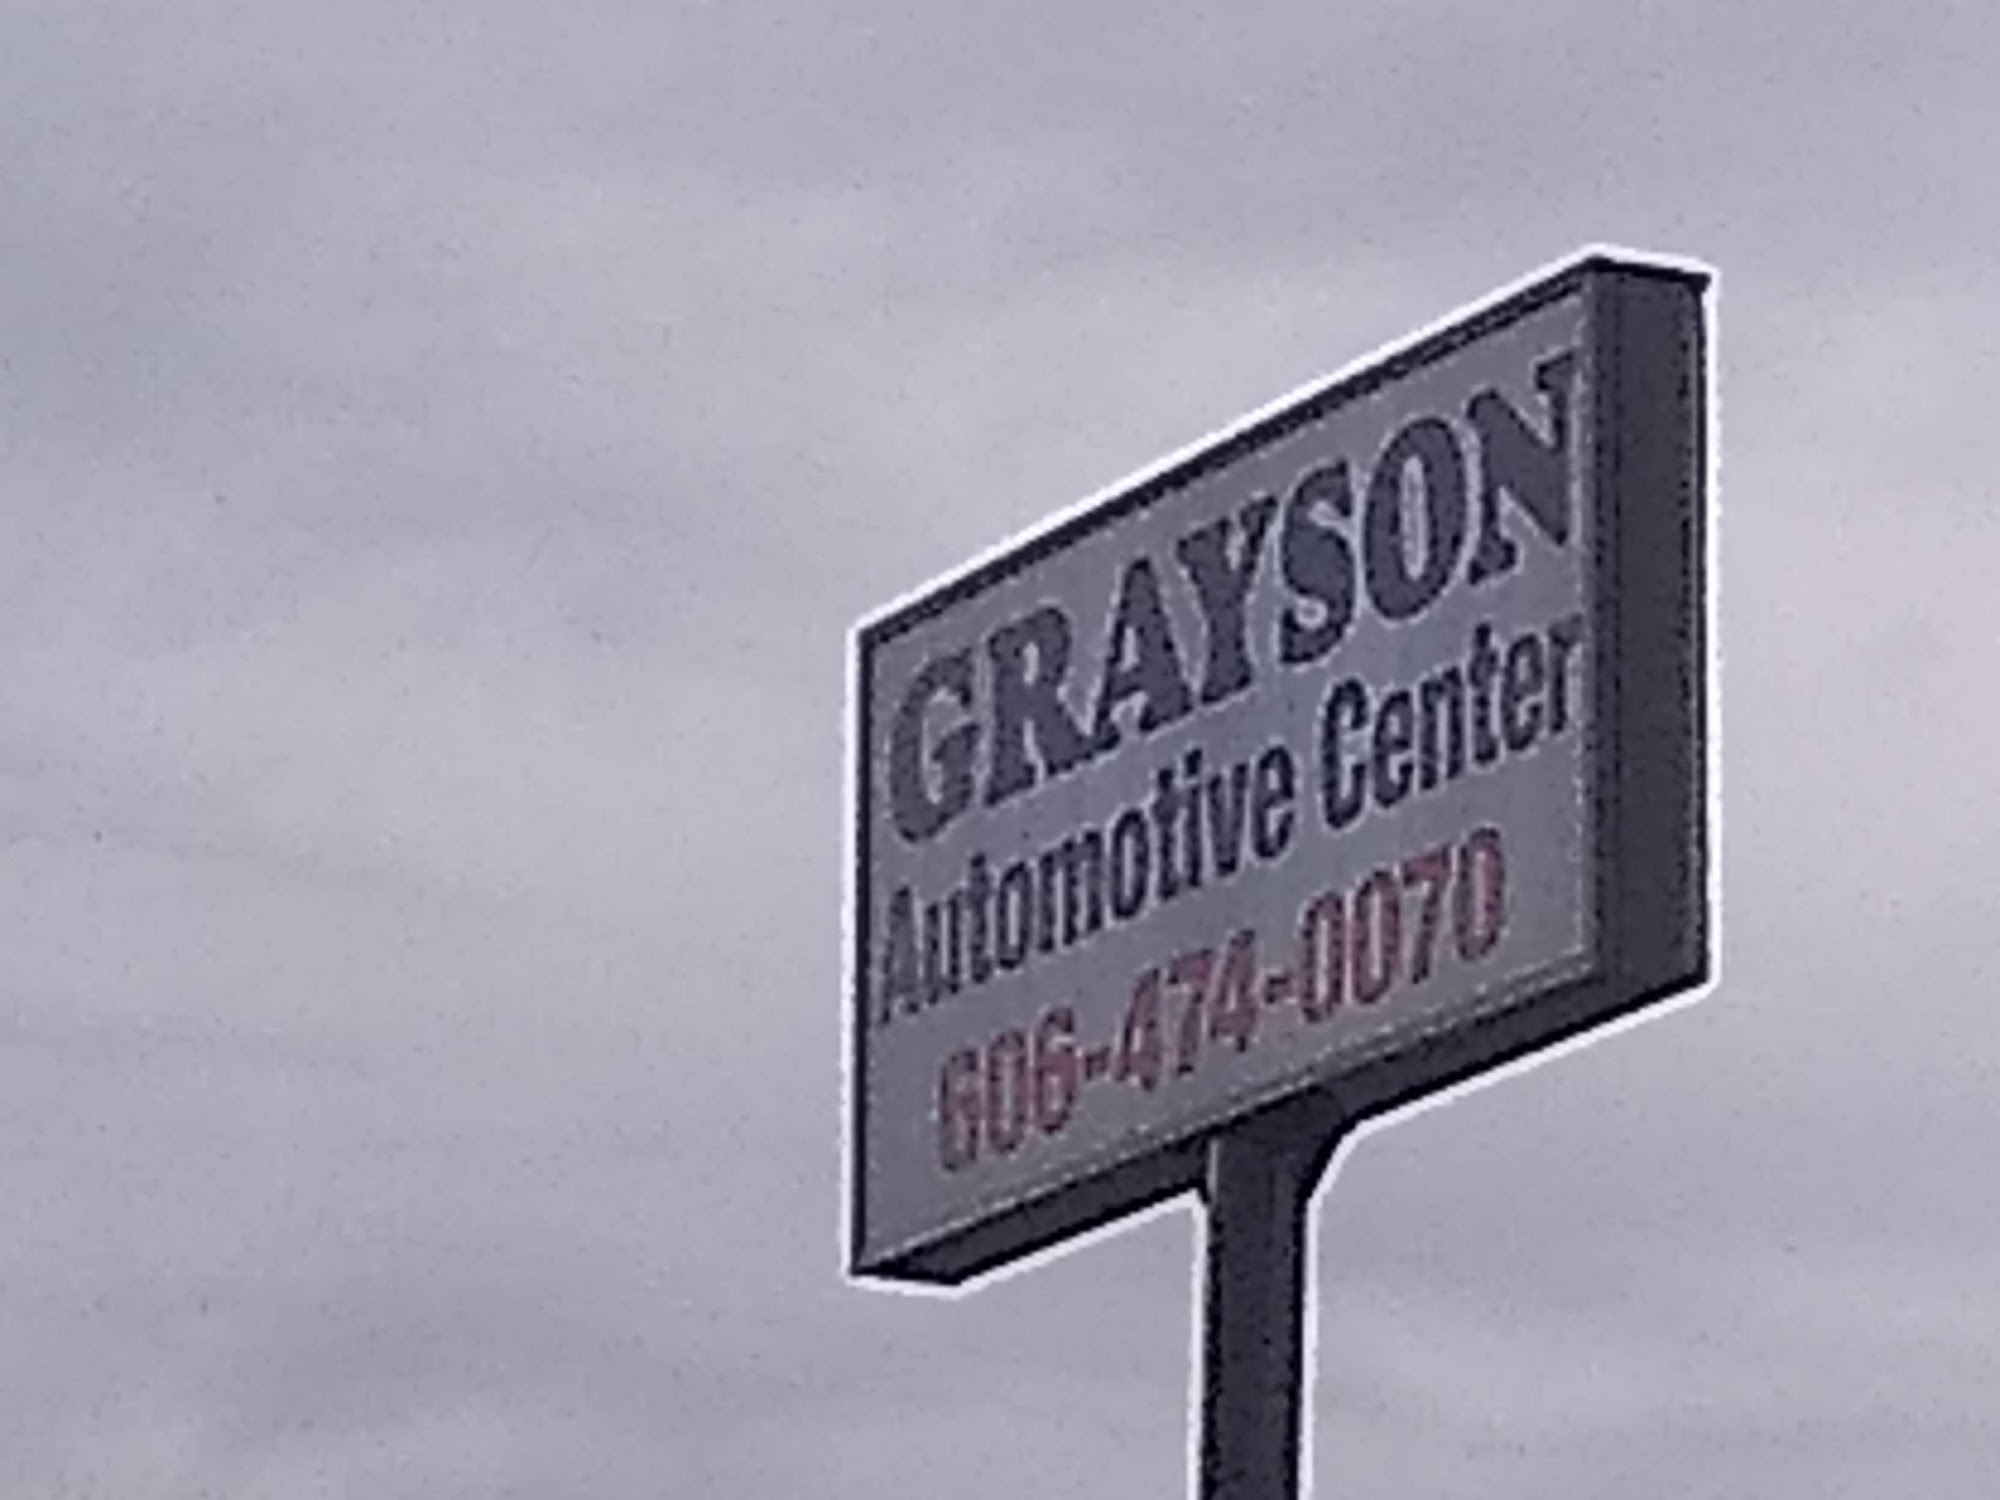 Grayson Automotive 756 C W Stevens Boulevard, Grayson Kentucky 41143